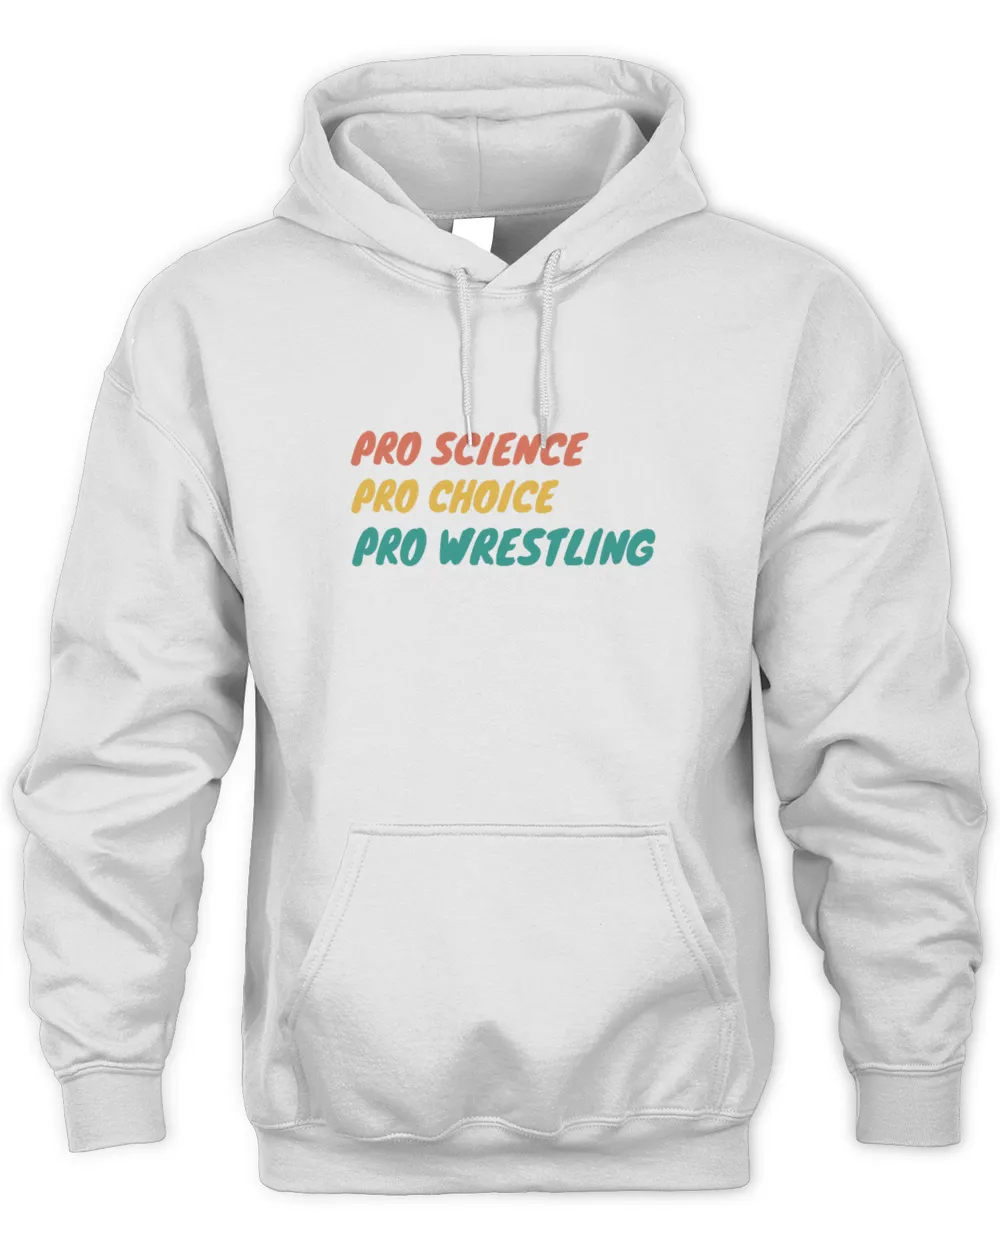 PRO SCIENCE PRO CHOICE PRO WRESTLING T-Shirt